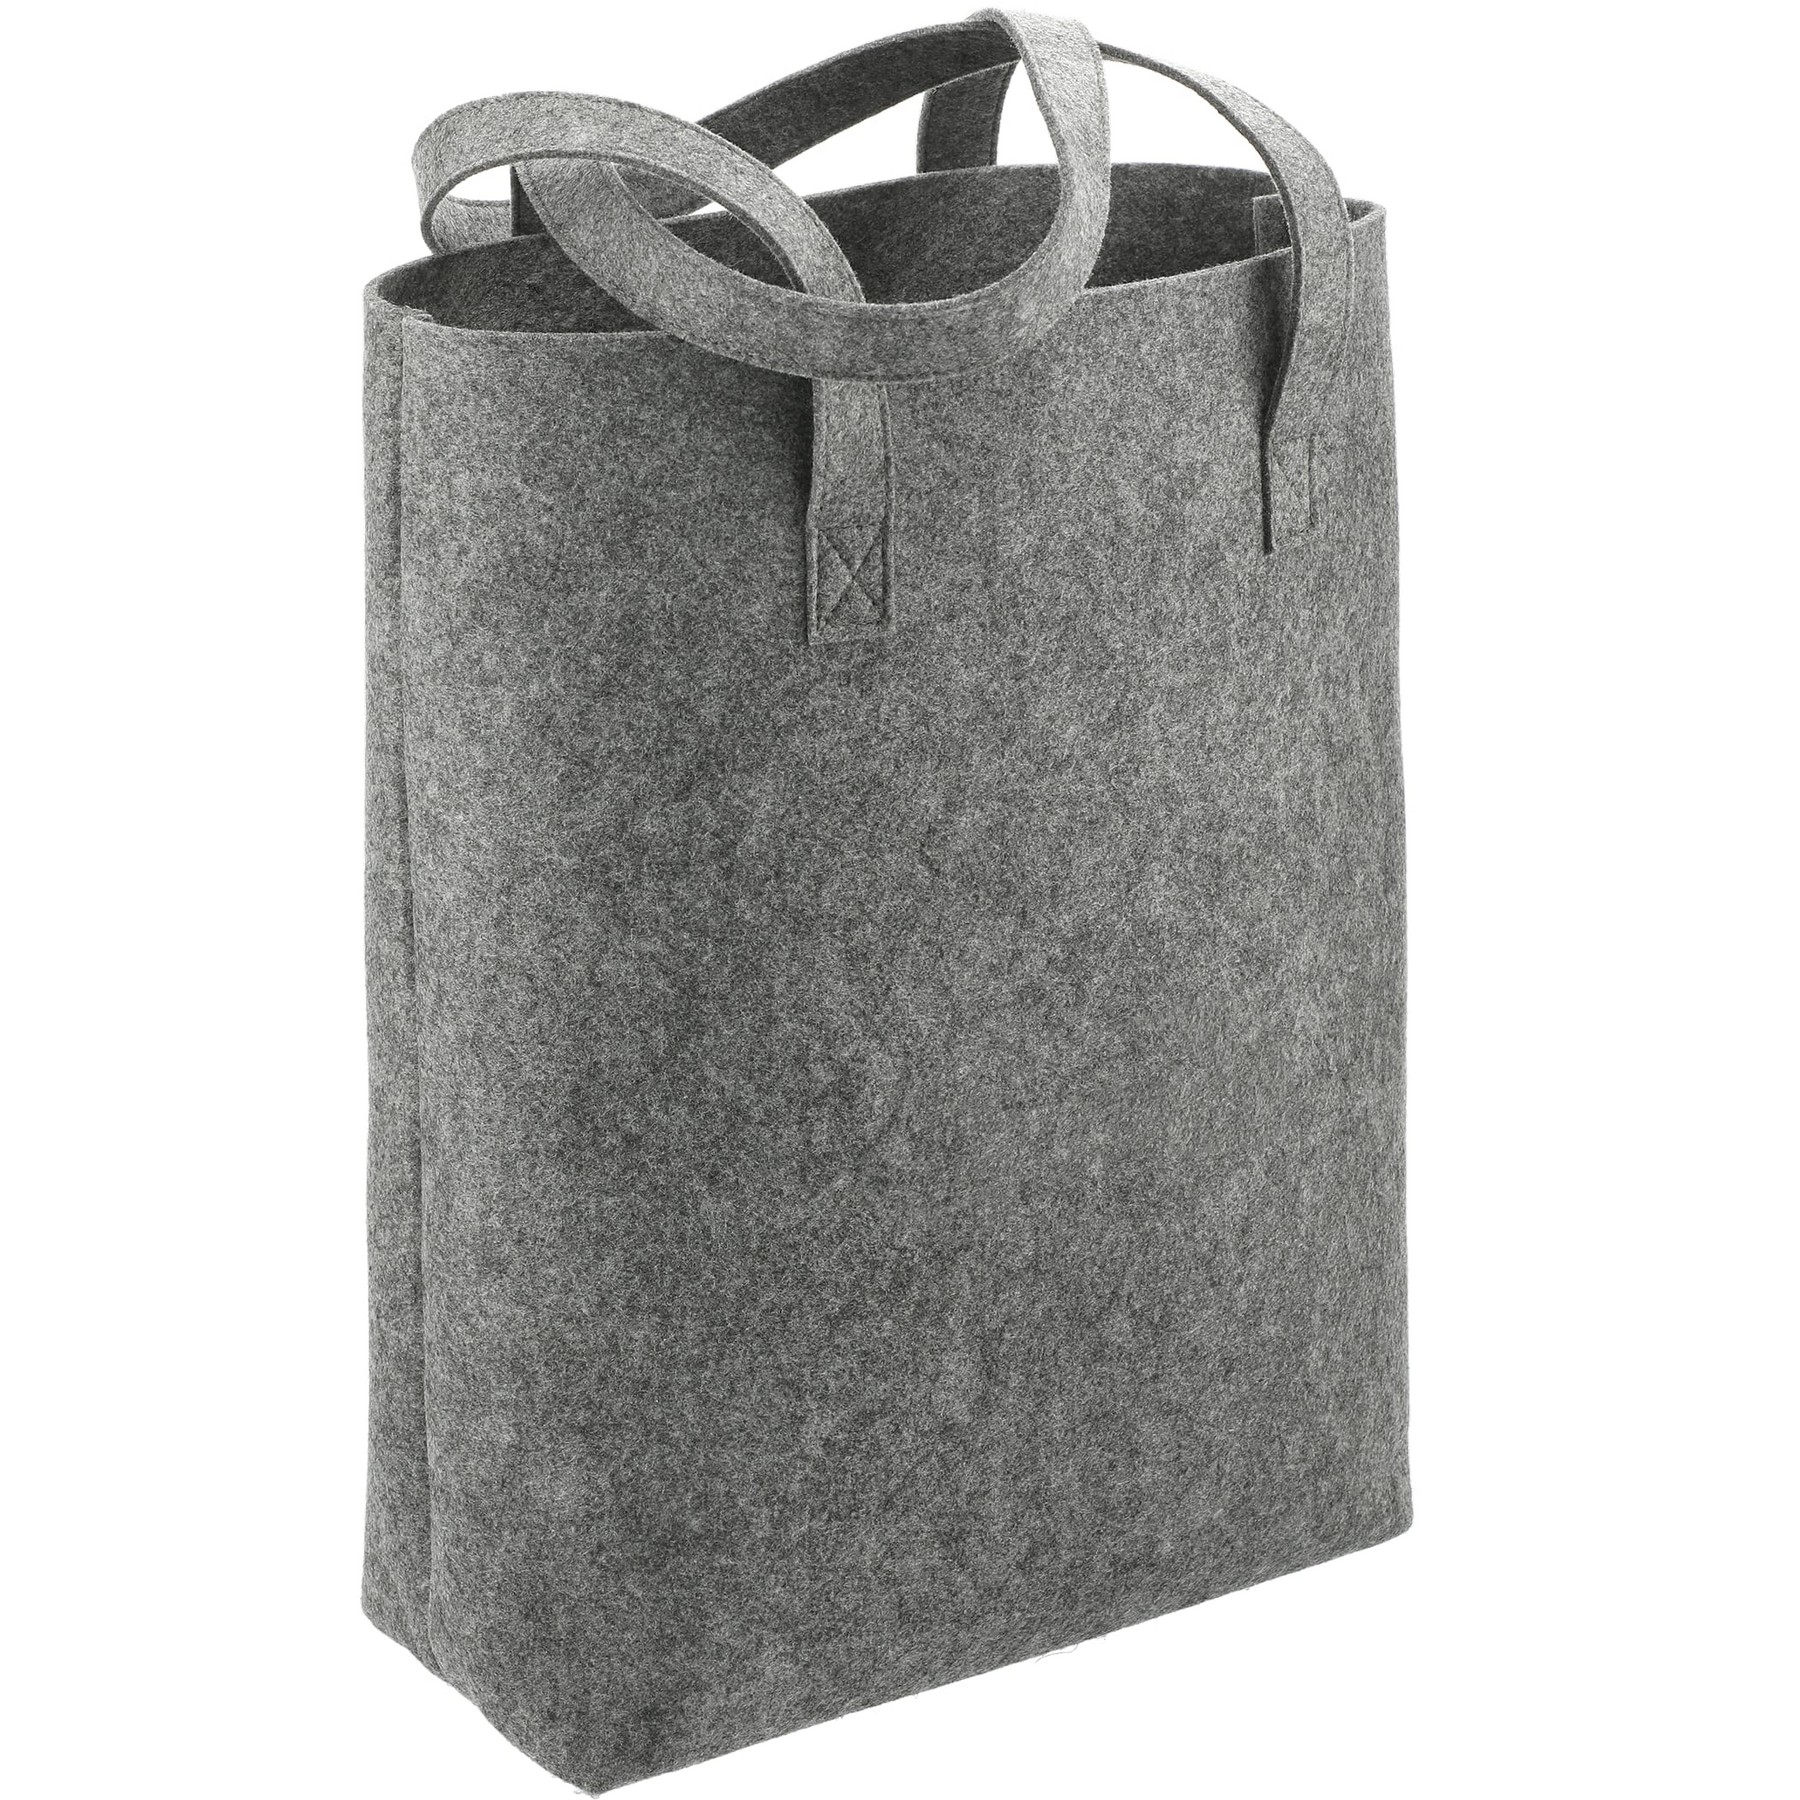 Latest Design Fashion Felt Bags Women Handbags (TP-HB042)